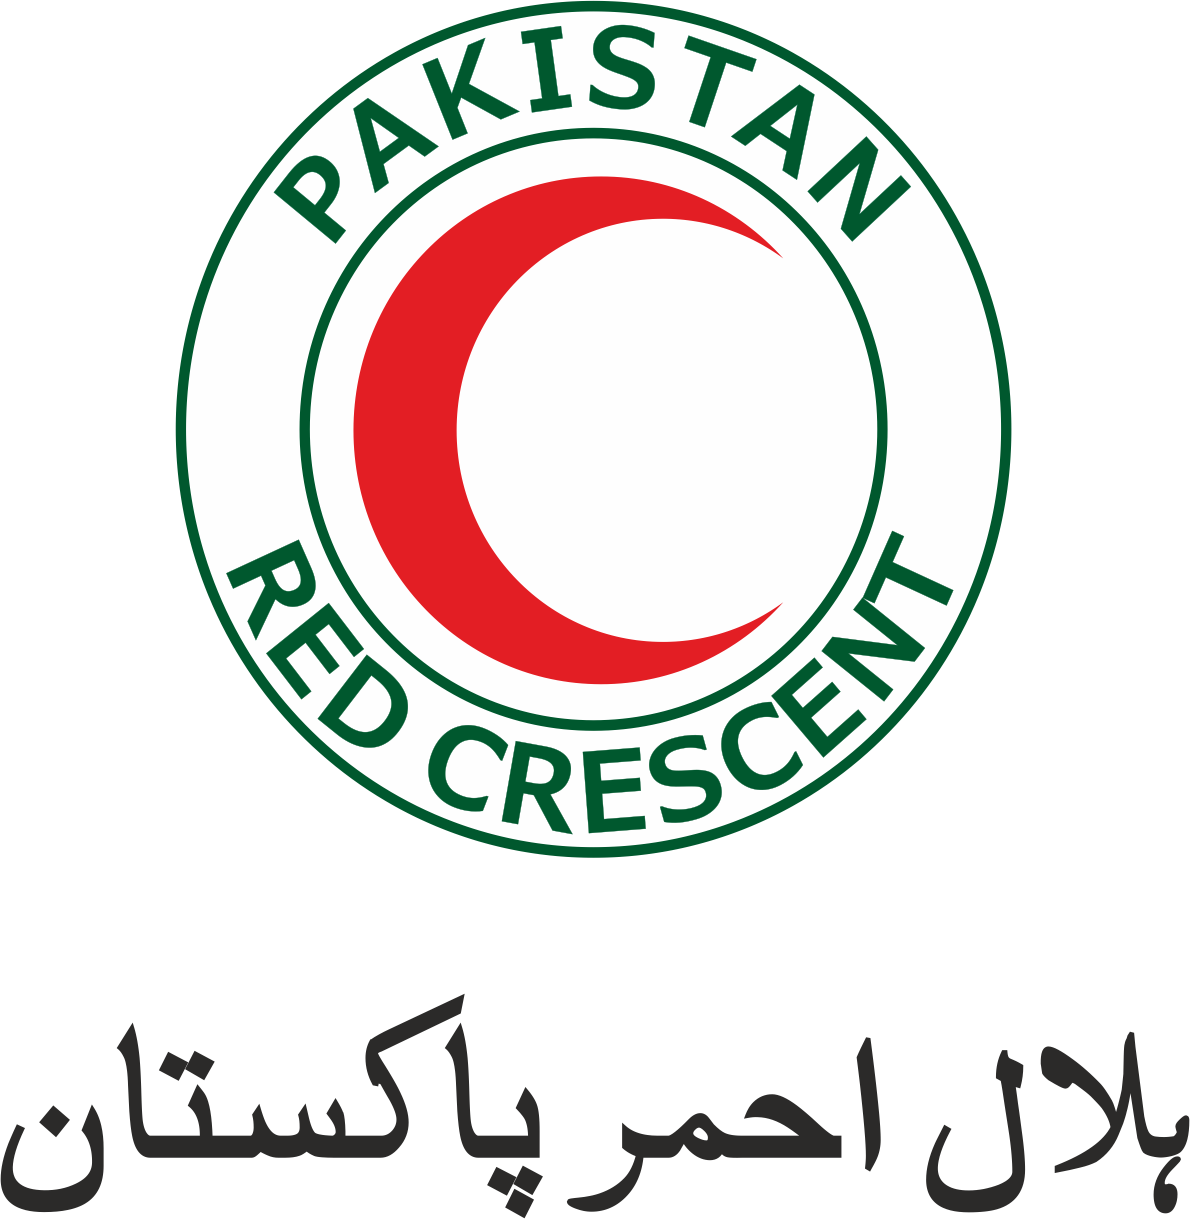 Pakistan Red Crescent Society, Khyber Pakhtunkhwa Provincial Branch